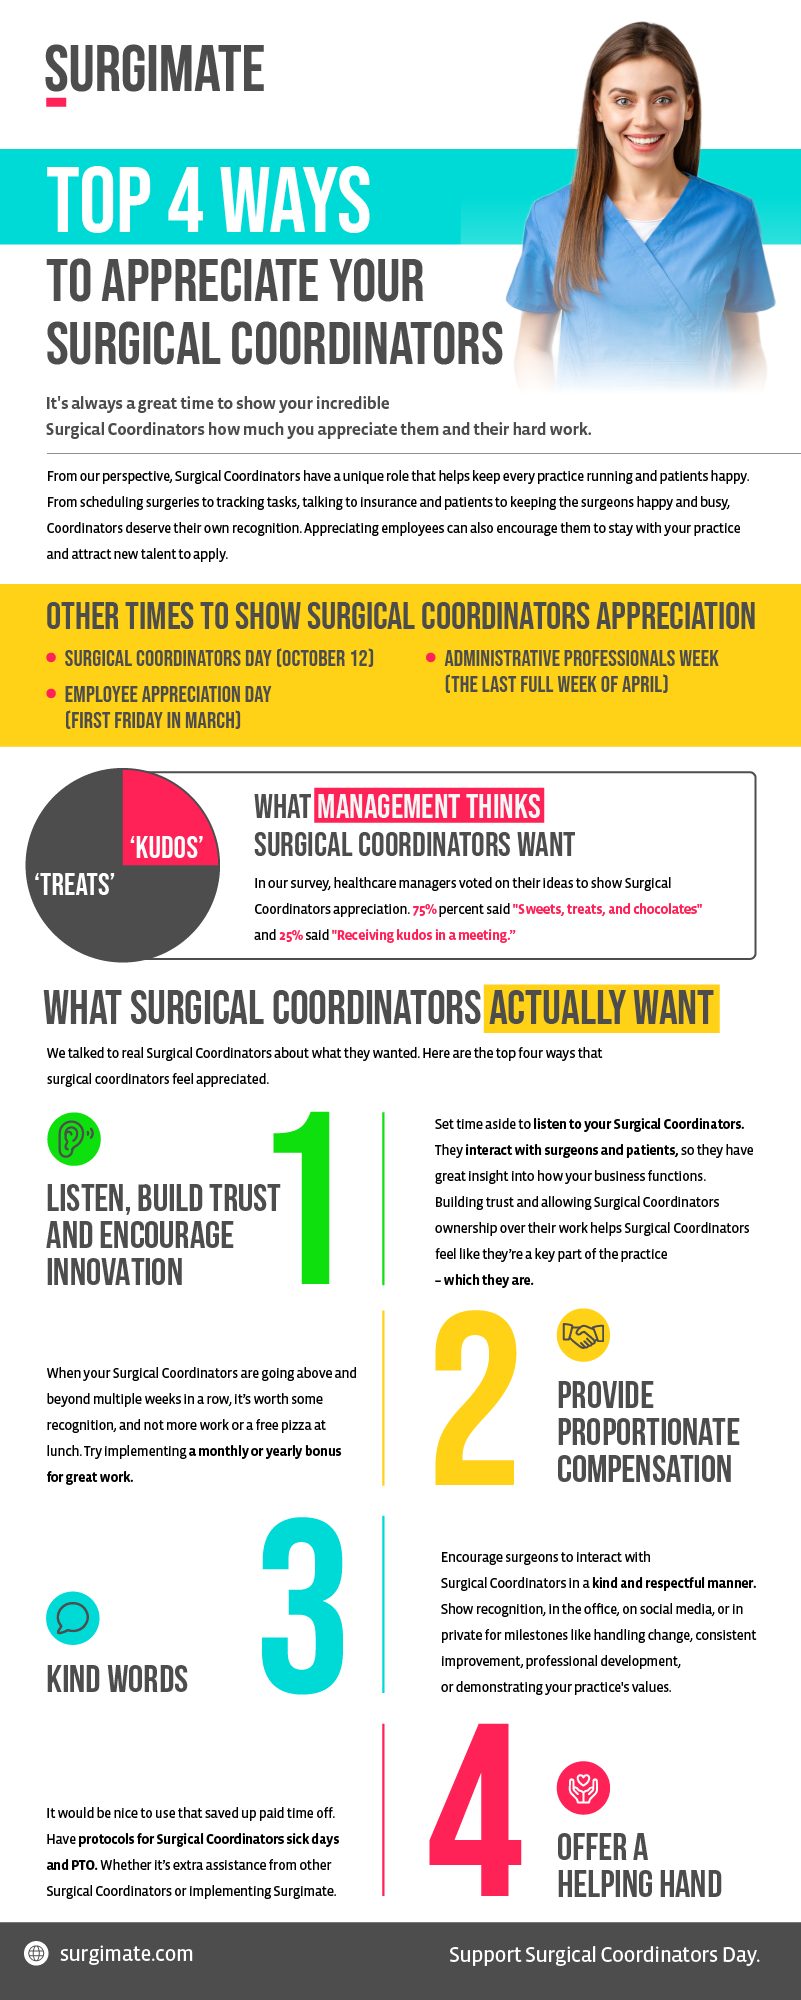 Top 4 Ways to Appreciate Your Surgical Coordinators